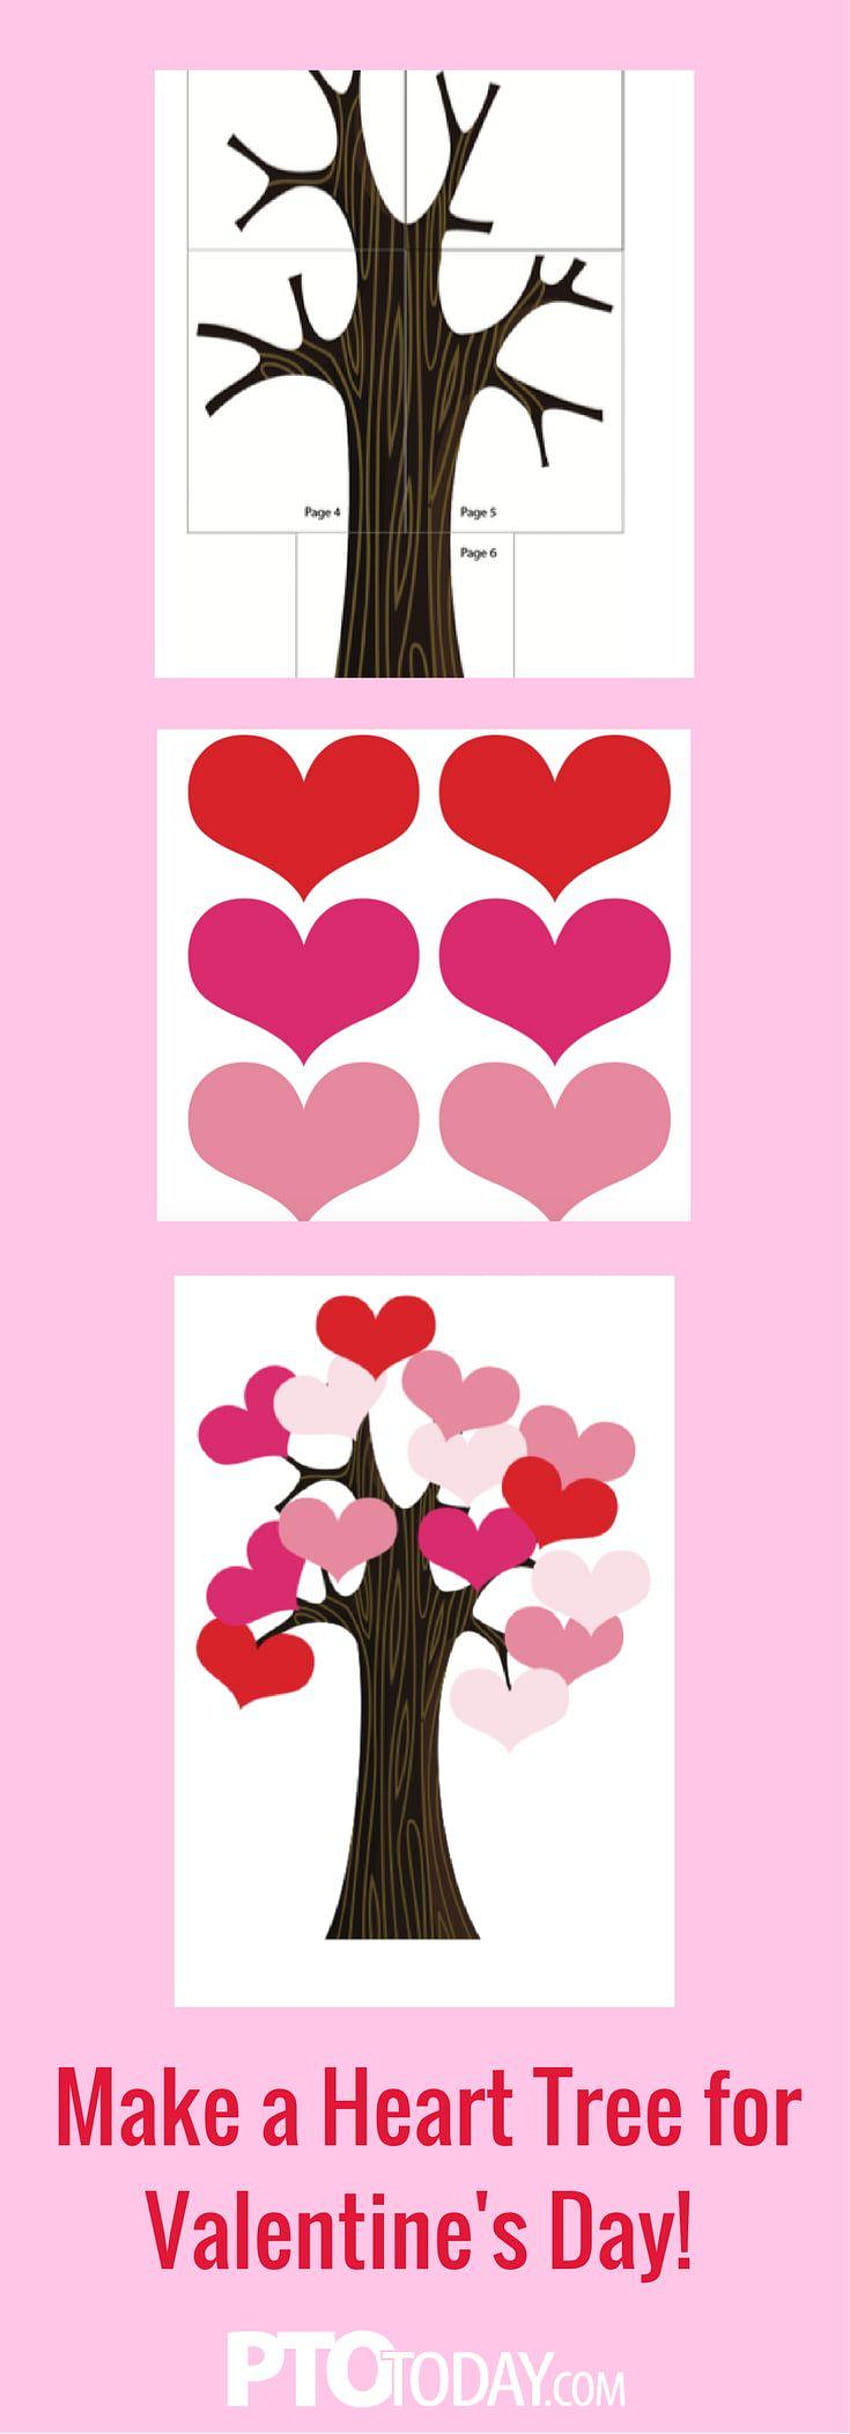 Free Preschool Heart Cliparts, Download Free Preschool Heart - Clip Art ...